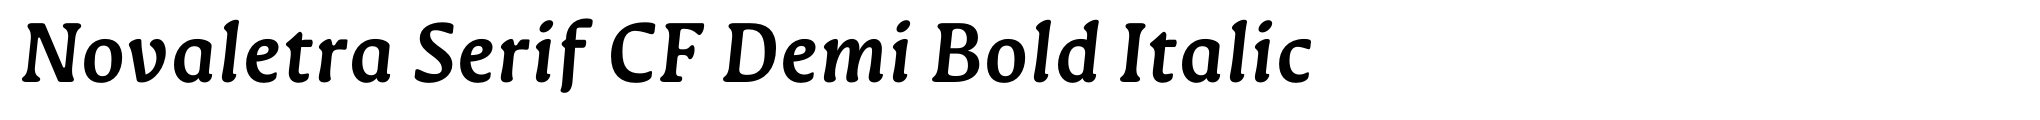 Novaletra Serif CF Demi Bold Italic image